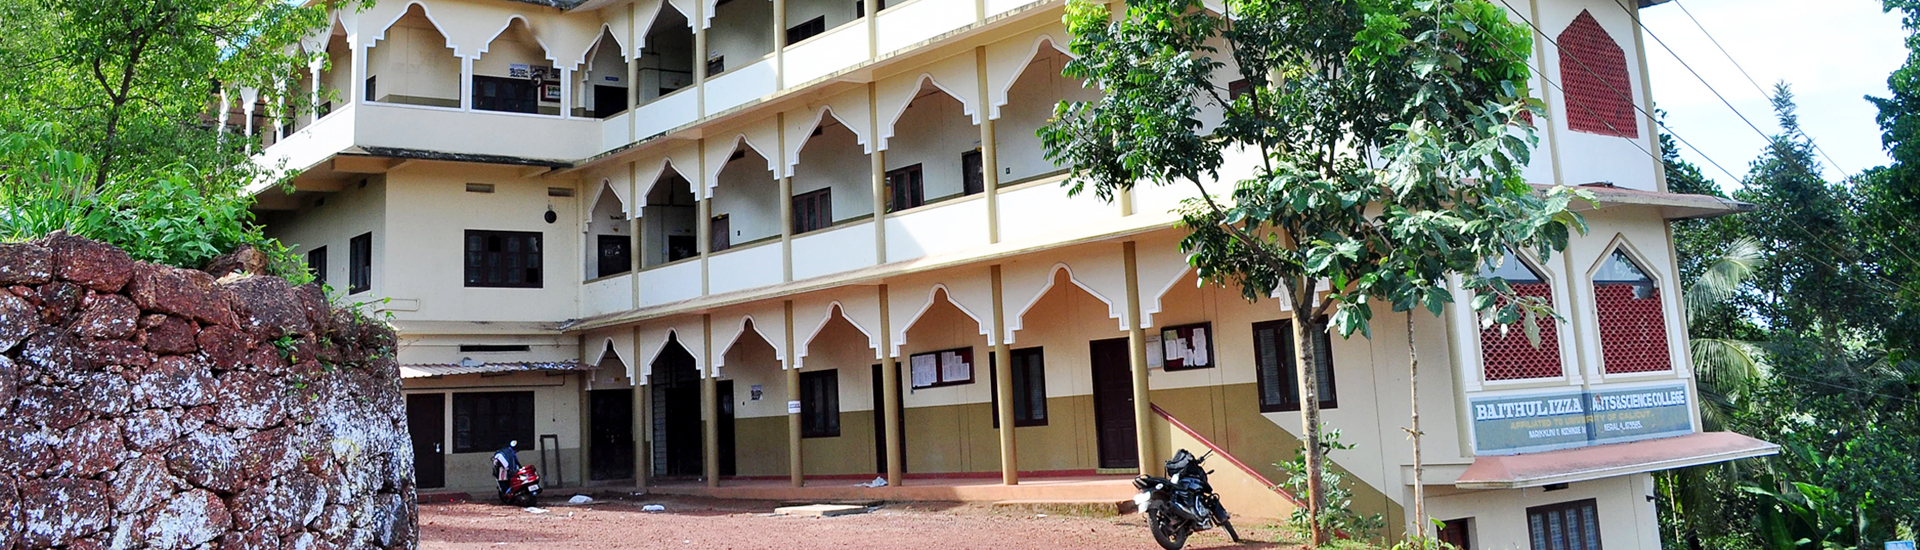 Baithul Izza Arts and Science College, Kozhikode